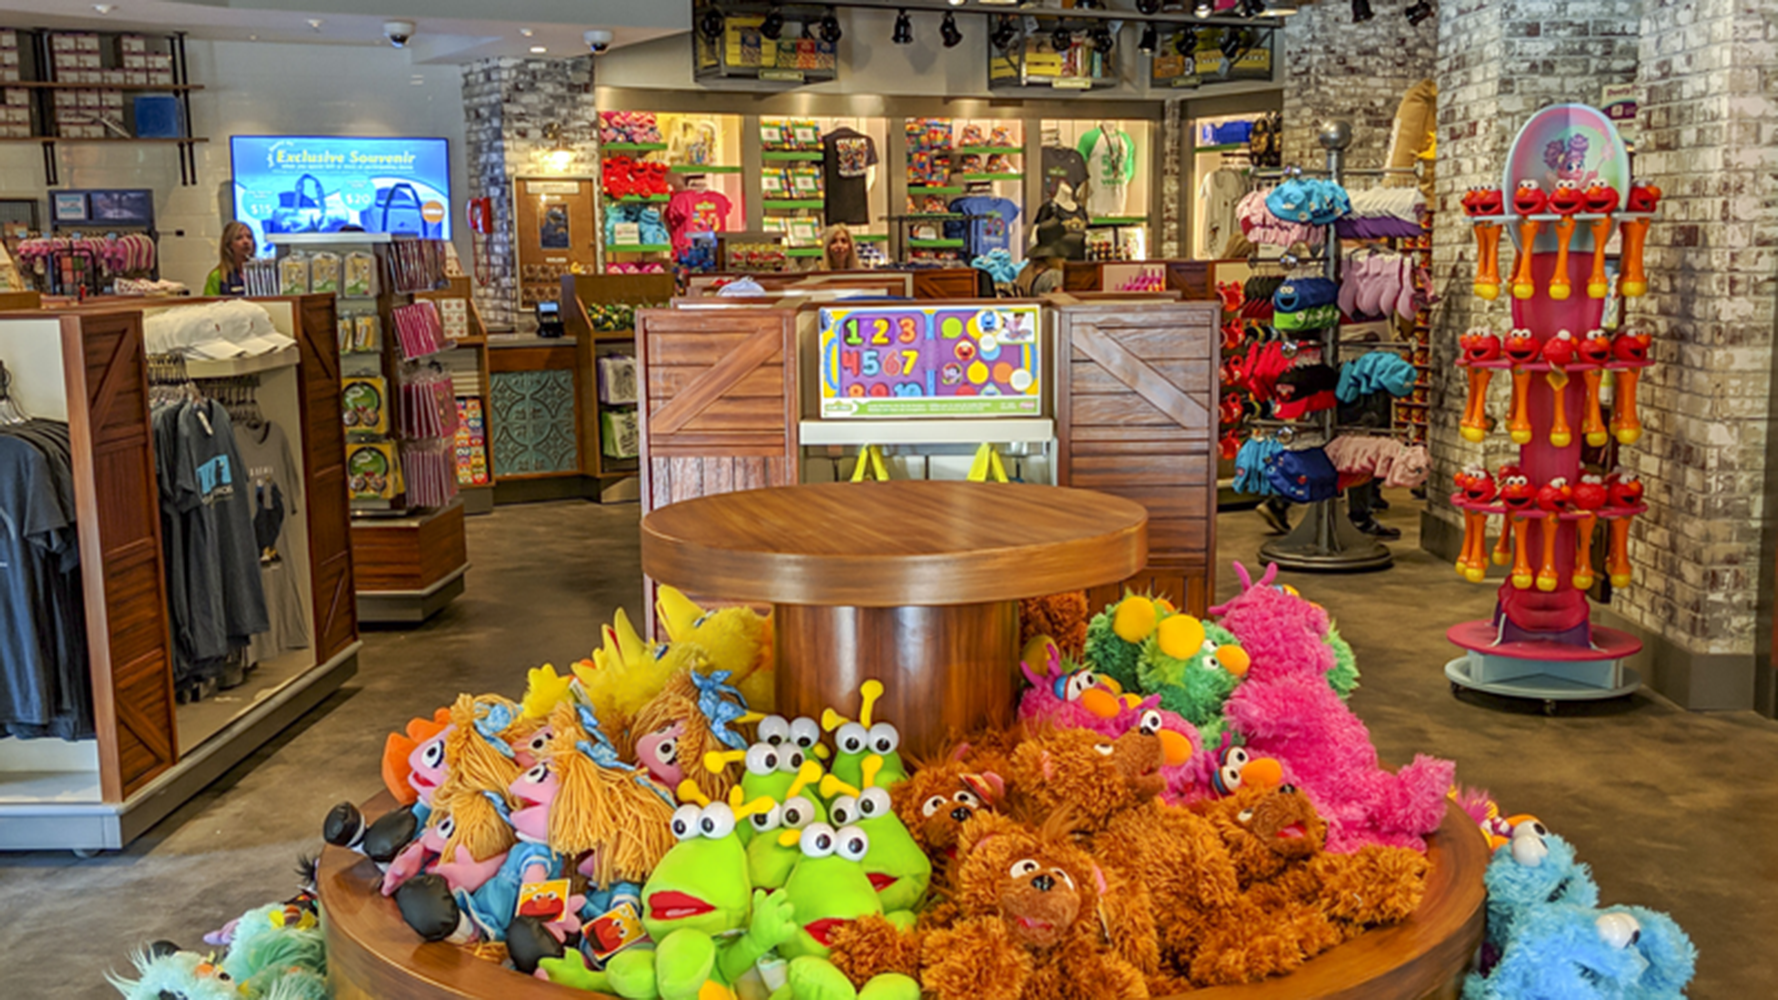 Sesame Street store with plush animals